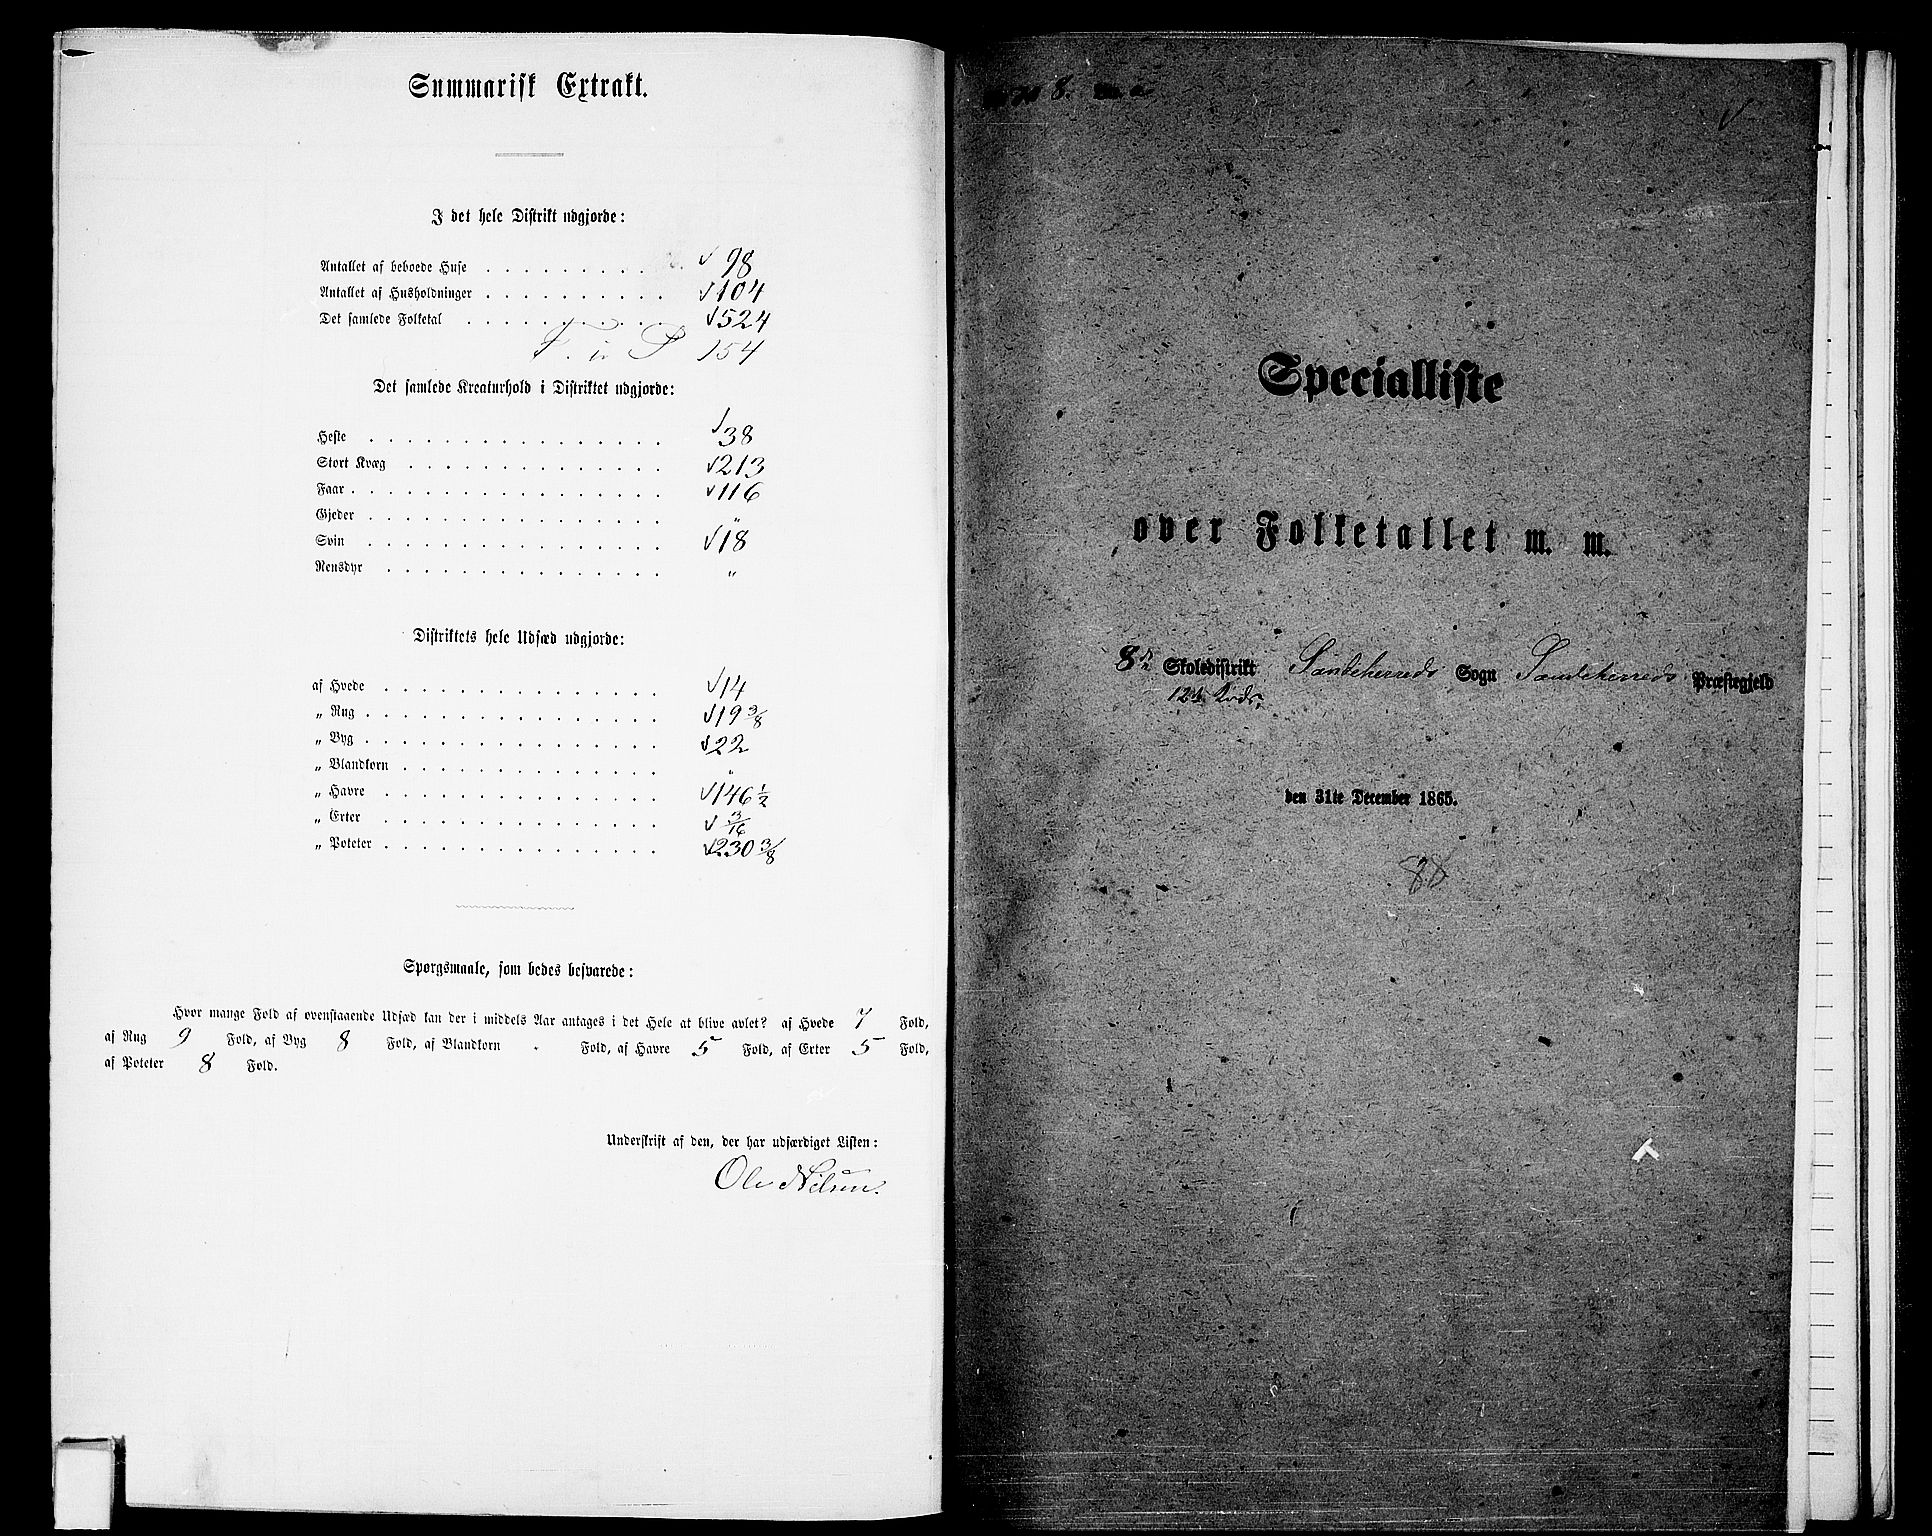 RA, Folketelling 1865 for 0724L Sandeherred prestegjeld, Sandeherred sokn, 1865, s. 200